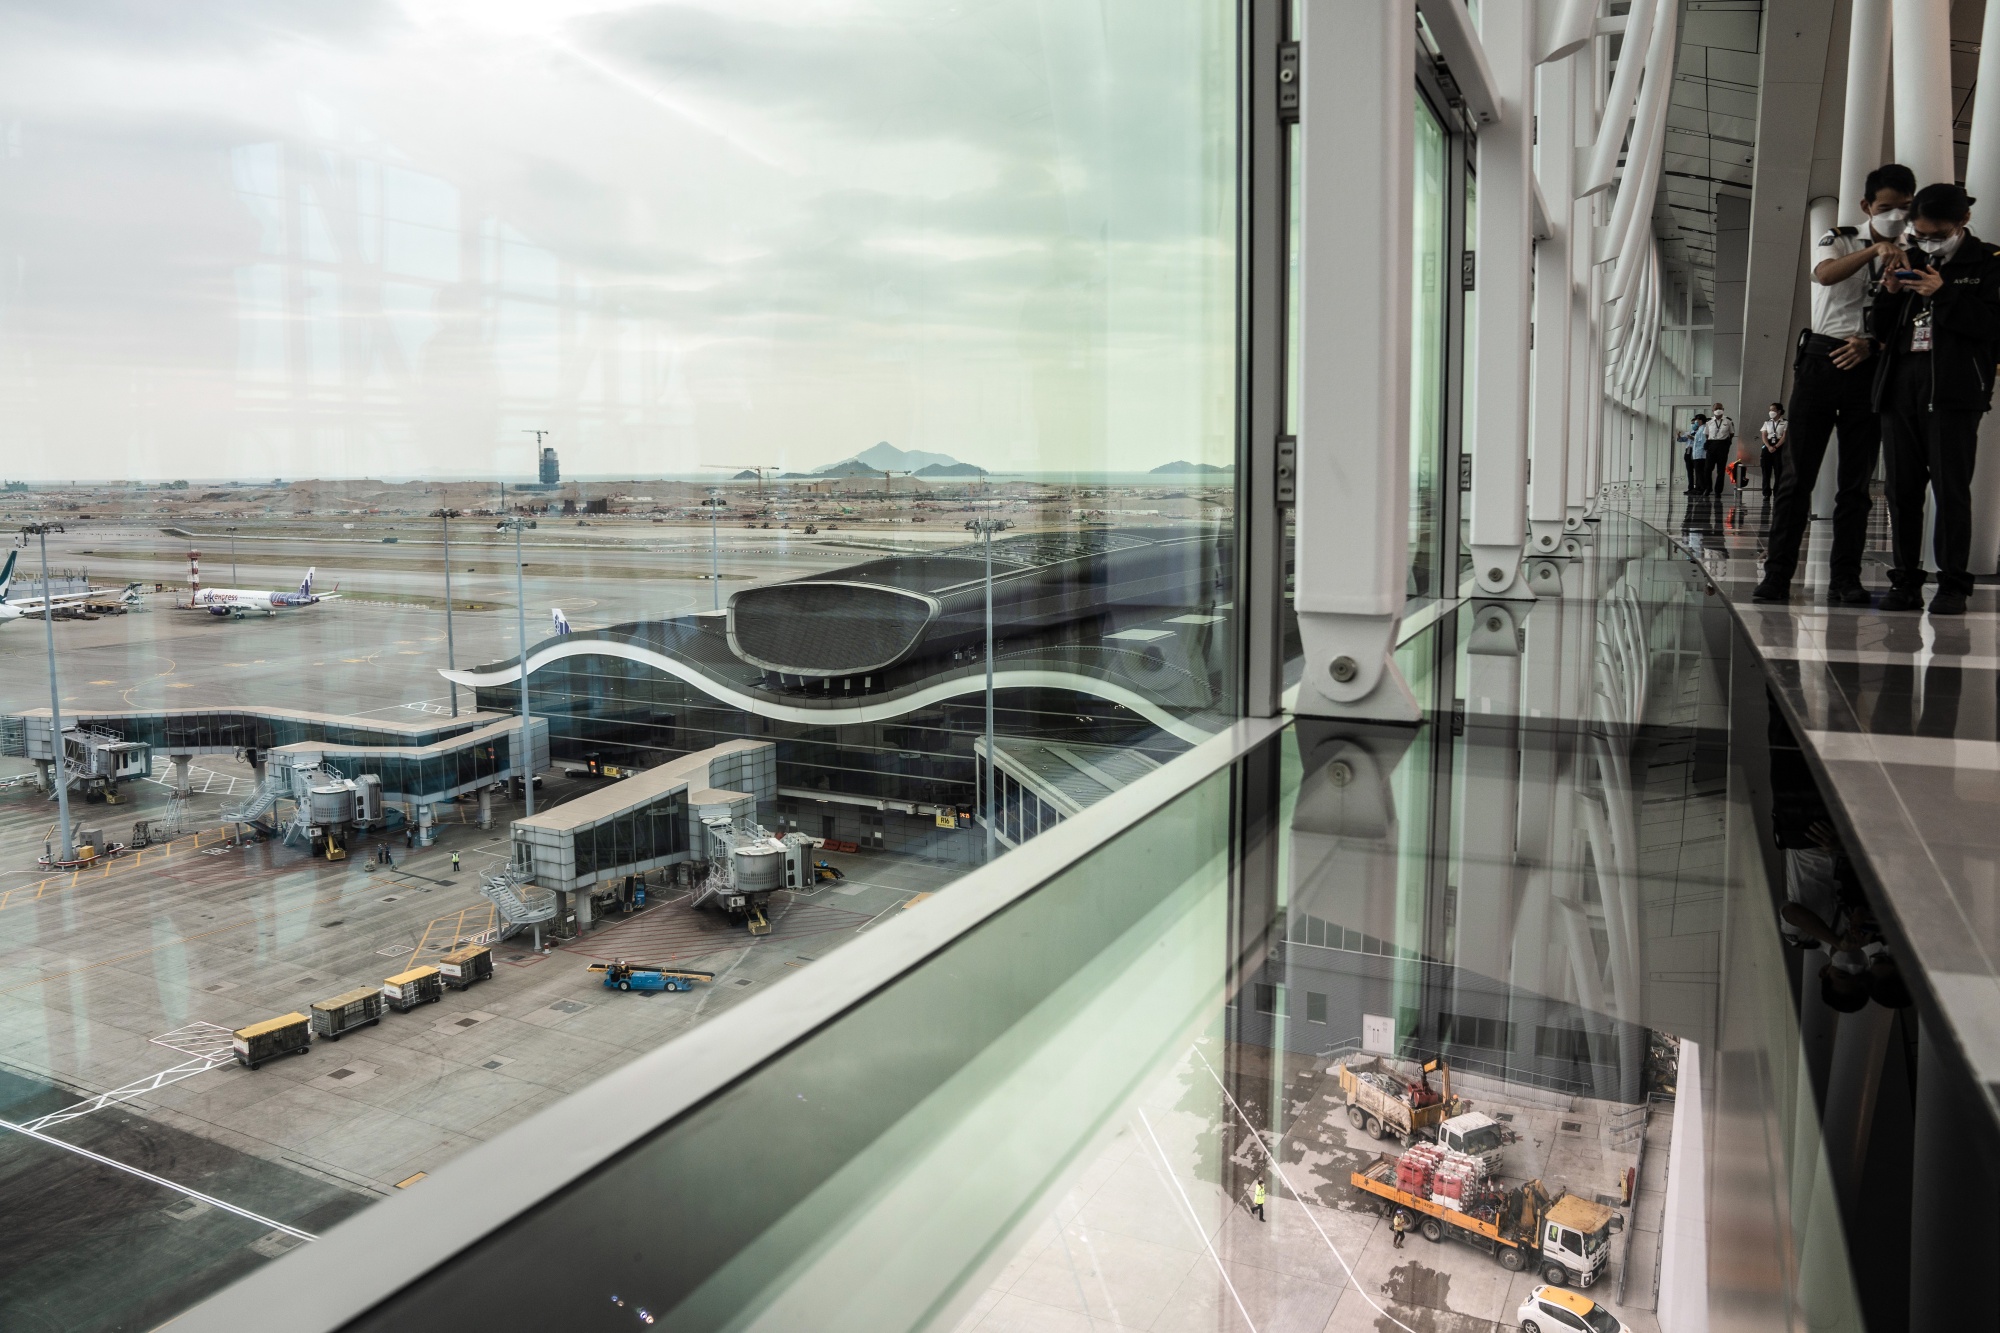 Hermes and Louis Vuitton duplexes land at Hong Kong International Airport -  Inside Retail Asia